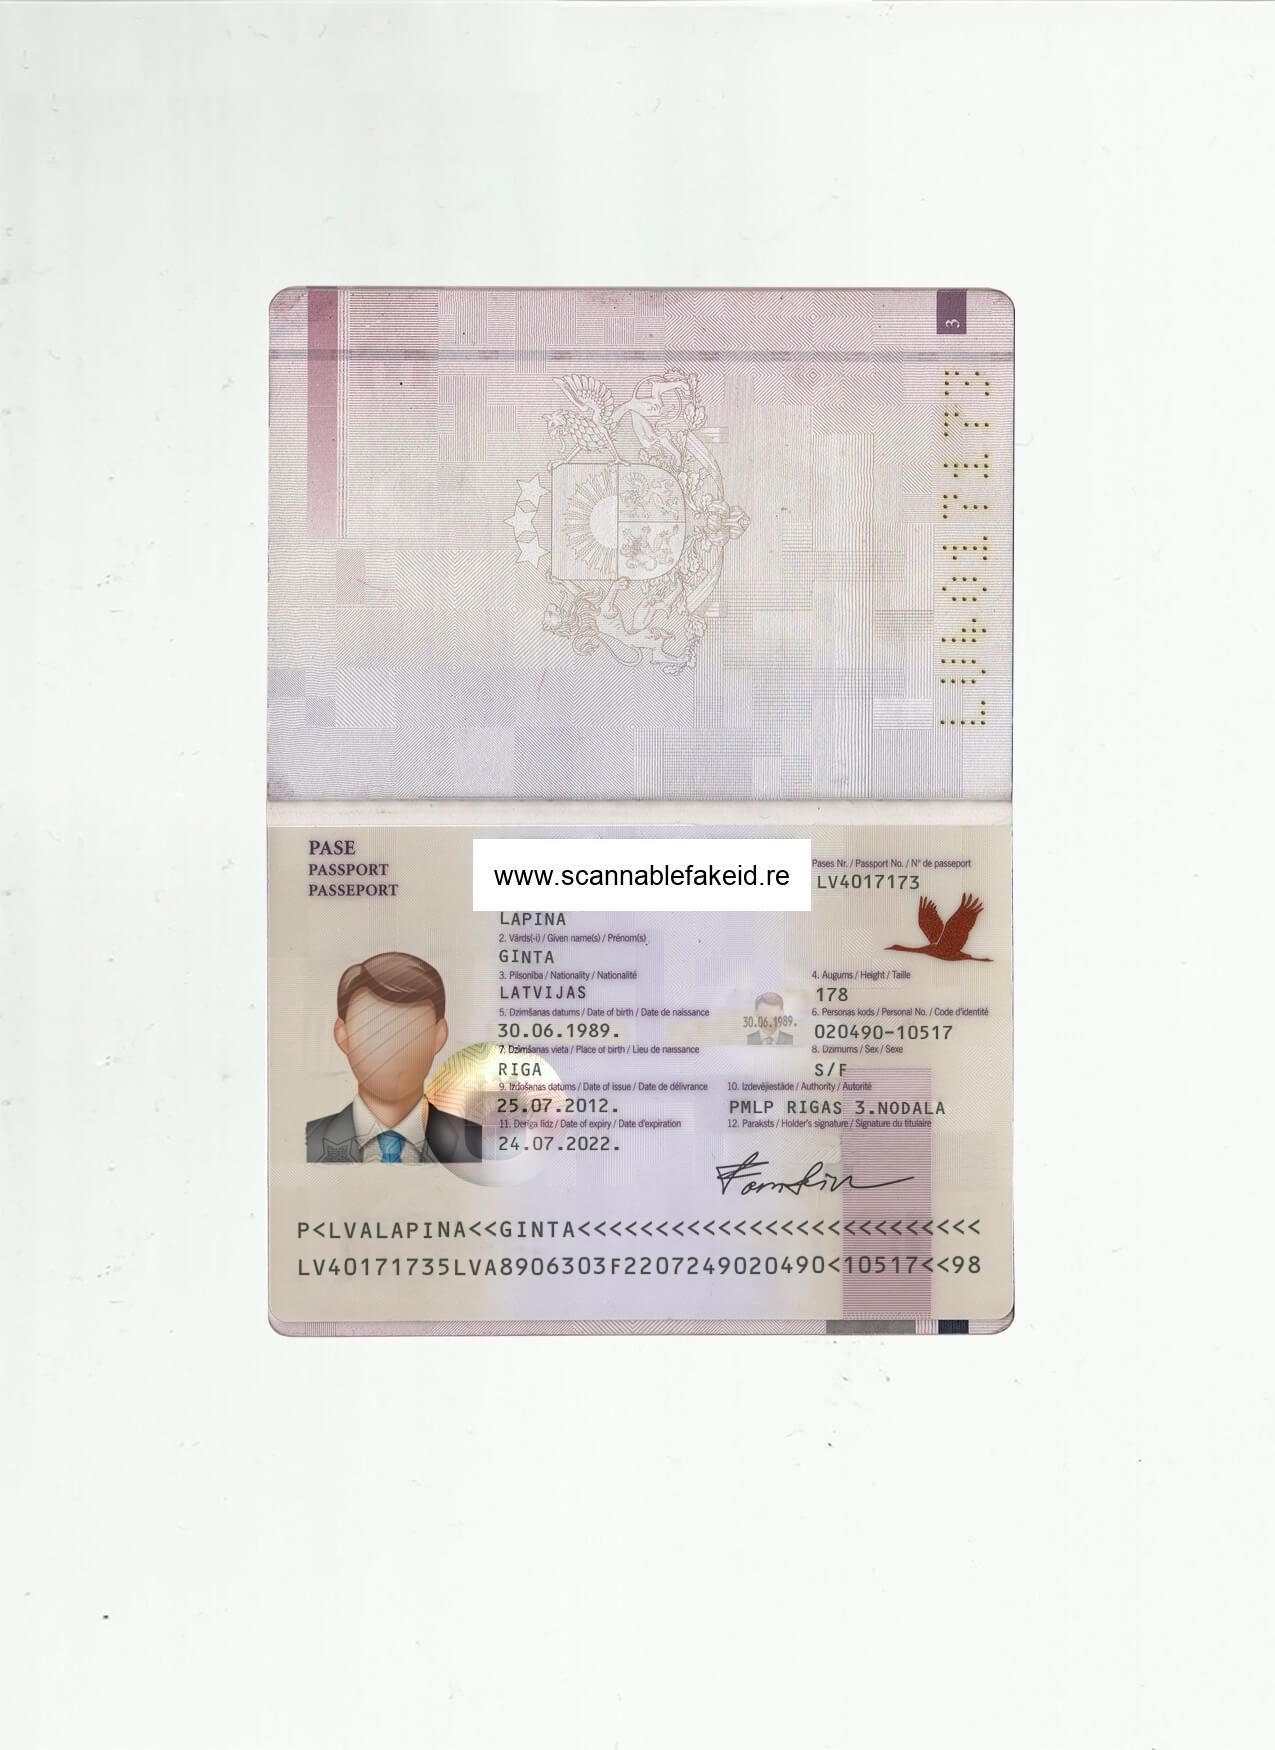 Latvia Fake Passport - Best Scannable Fake Id - Buy Fake IDs Online